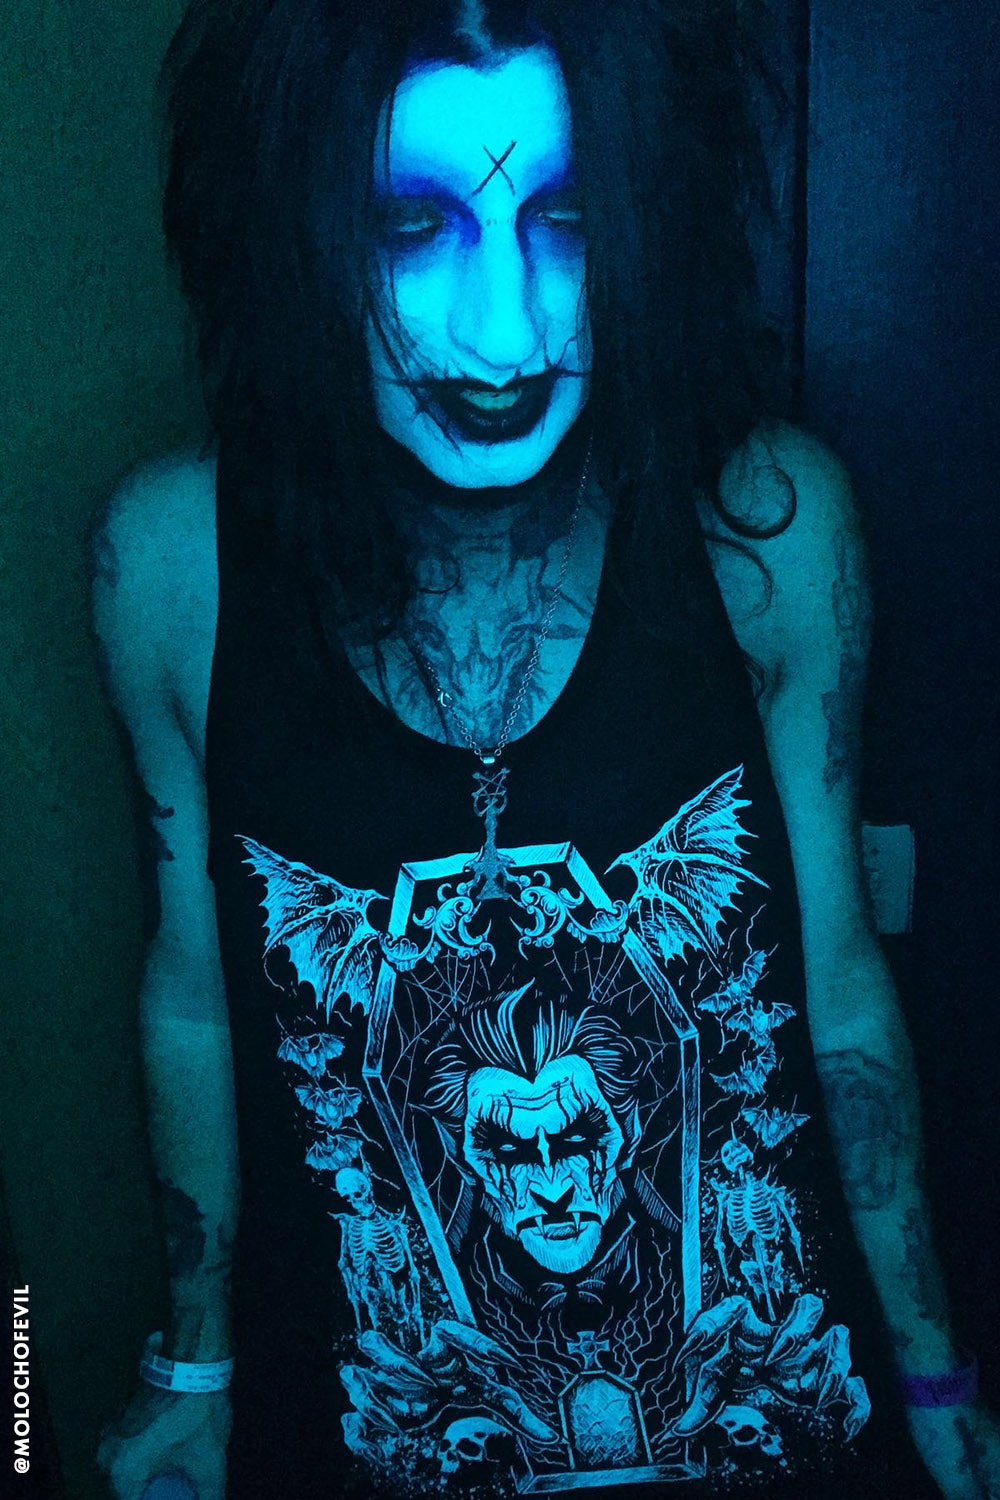 Count Dracula T-shirt